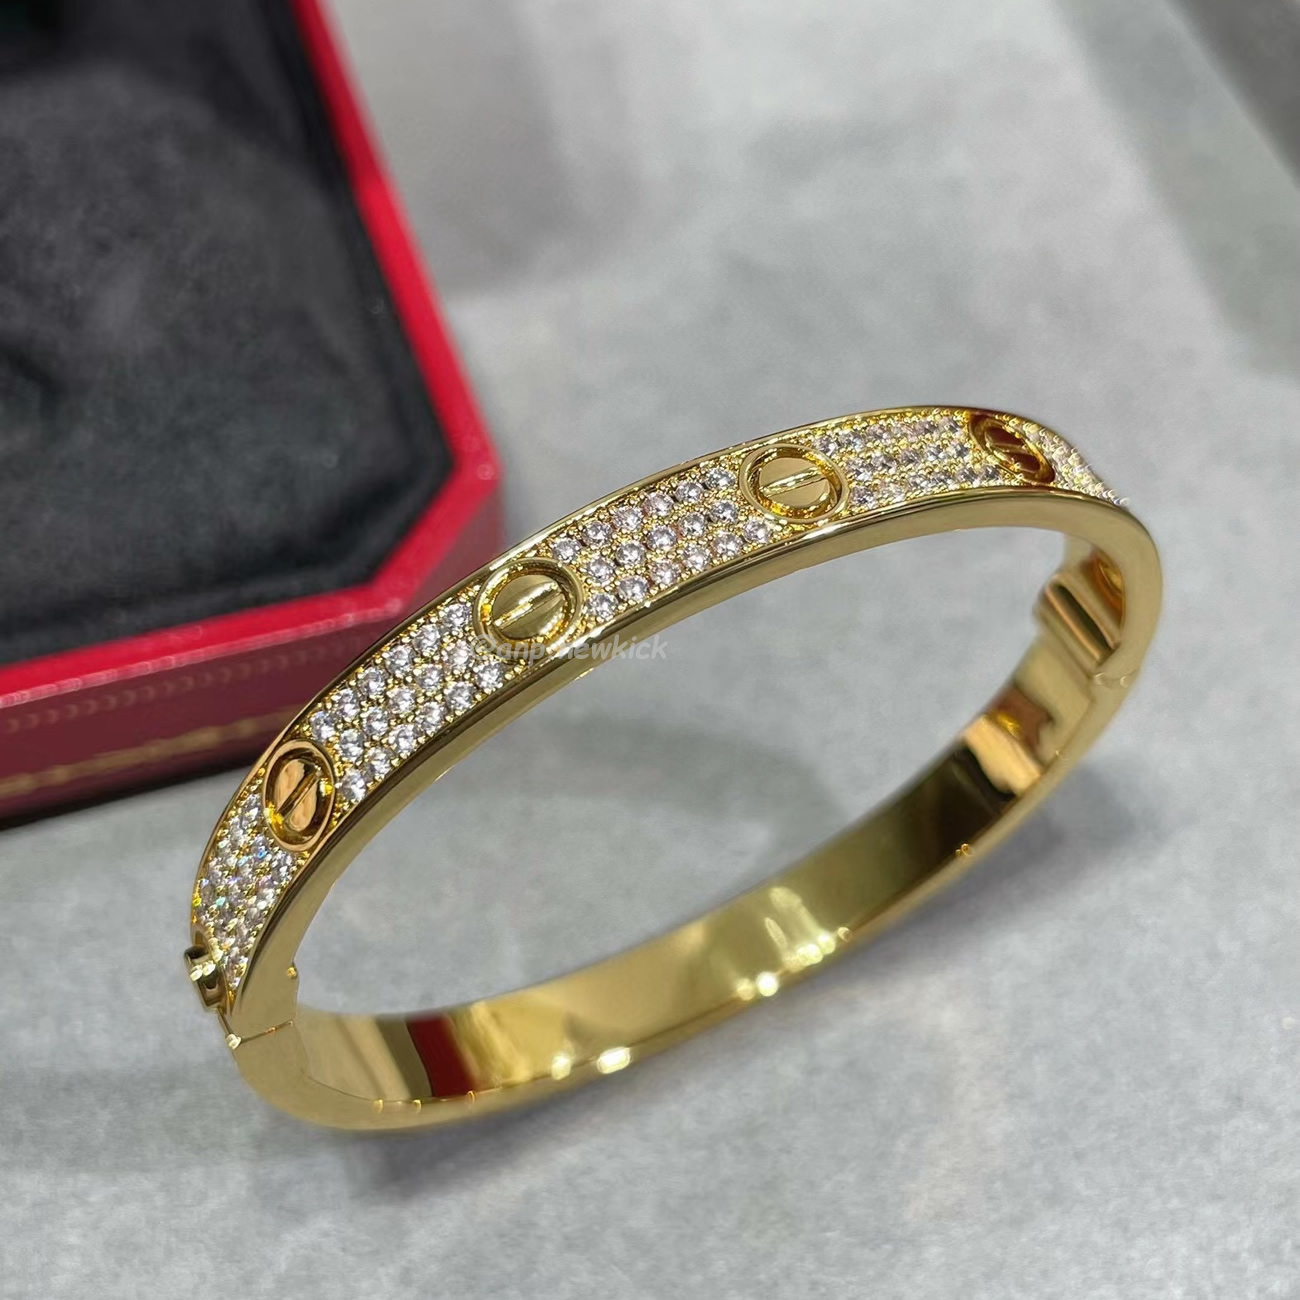 Cartier Bracelet Wide Version Full Sky Star Gold Rose Gold Platinum (6) - newkick.org